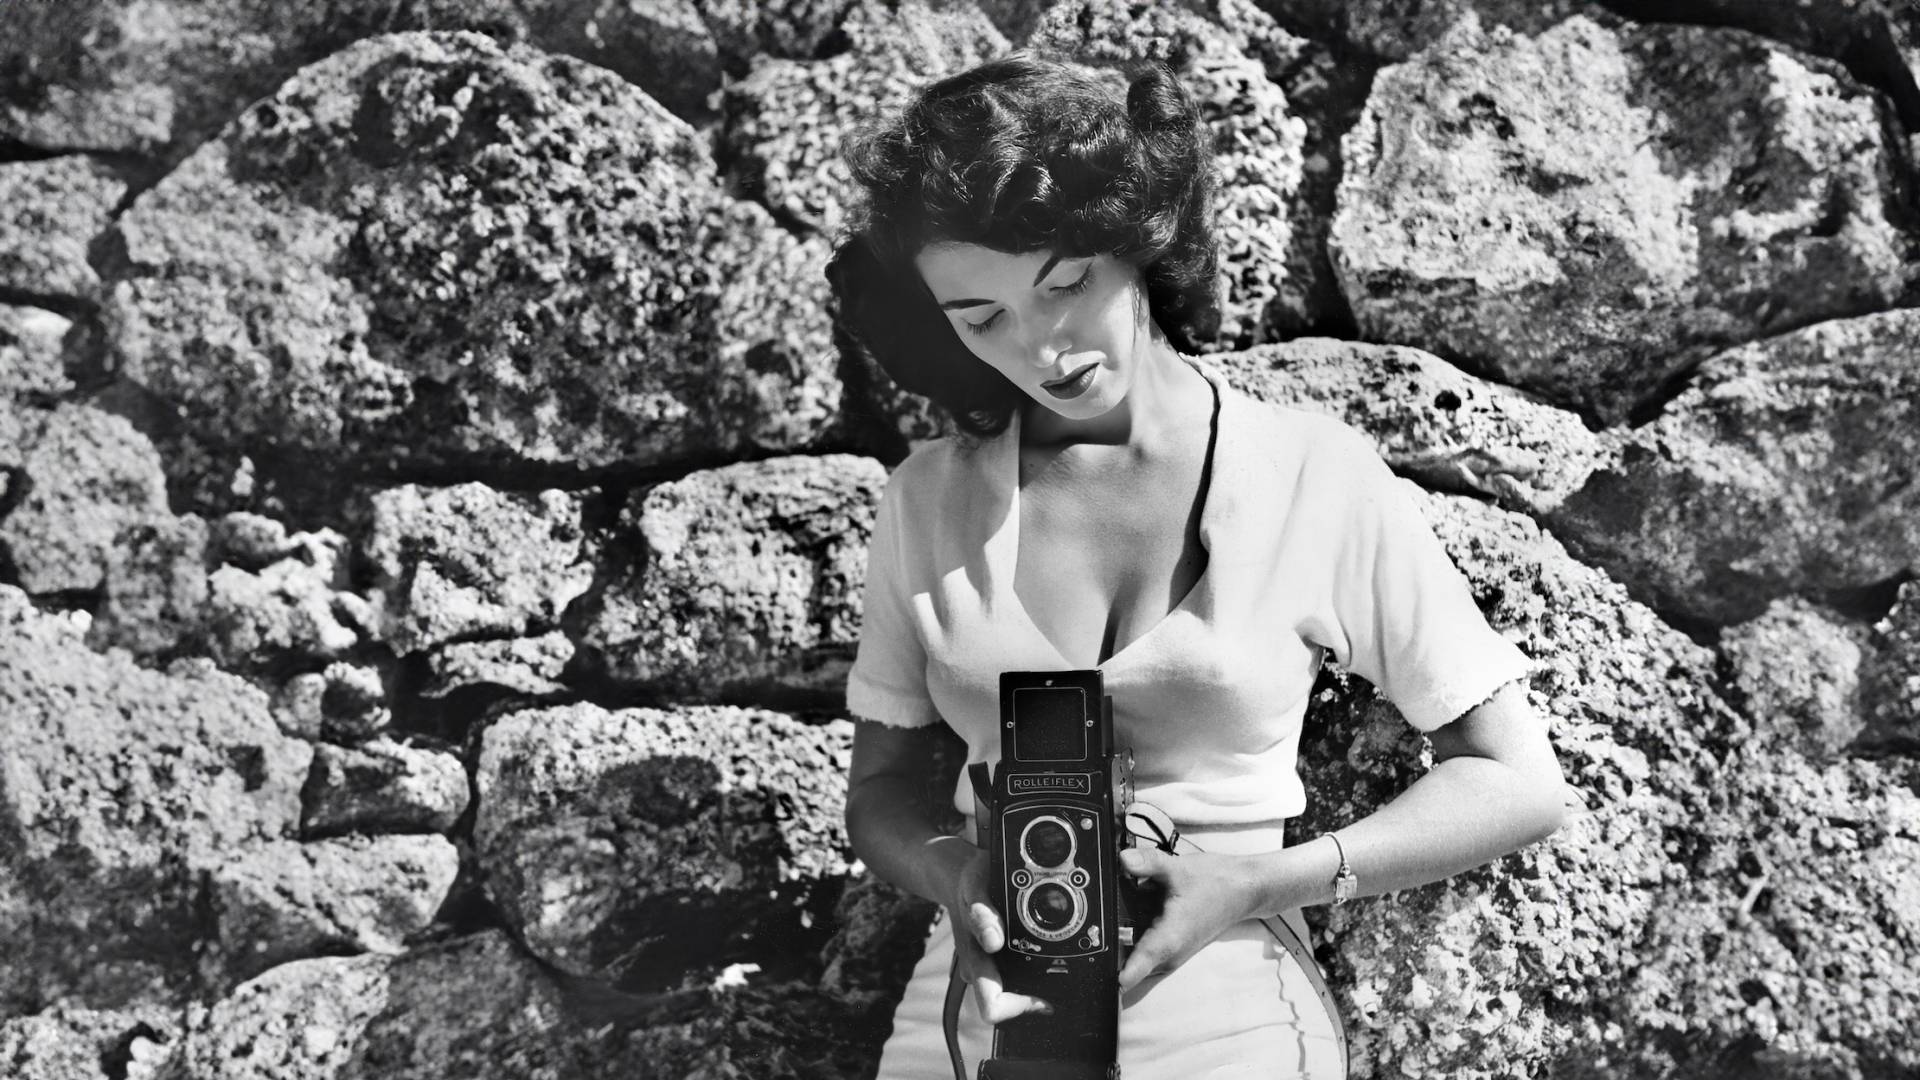 A beautiful 1950s-era woman wearing a low cut top, looks down towards her camera.